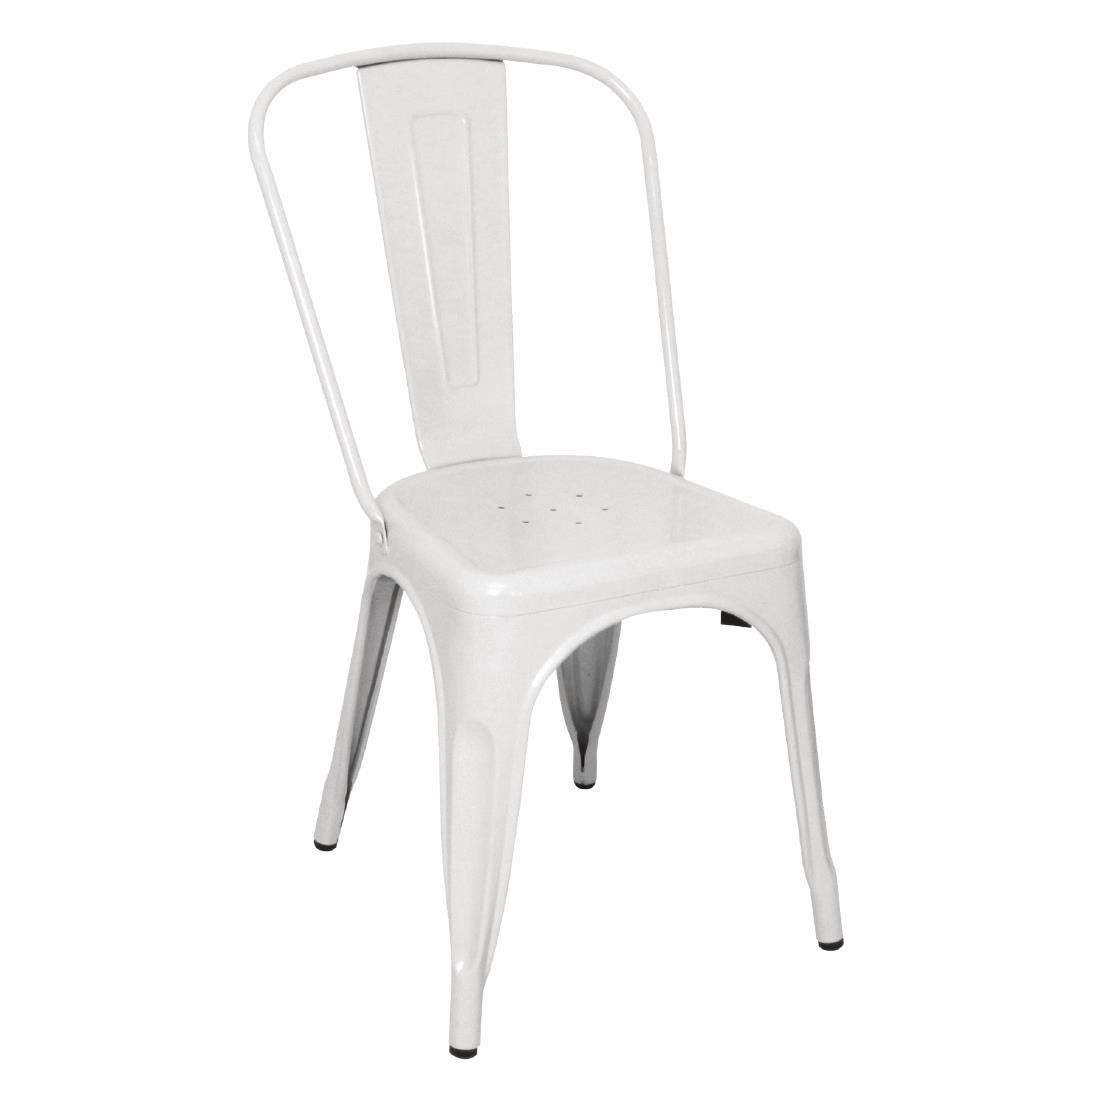 Bolero Bistro Steel Side Chair White (Pack of 4) - GL332  - 1